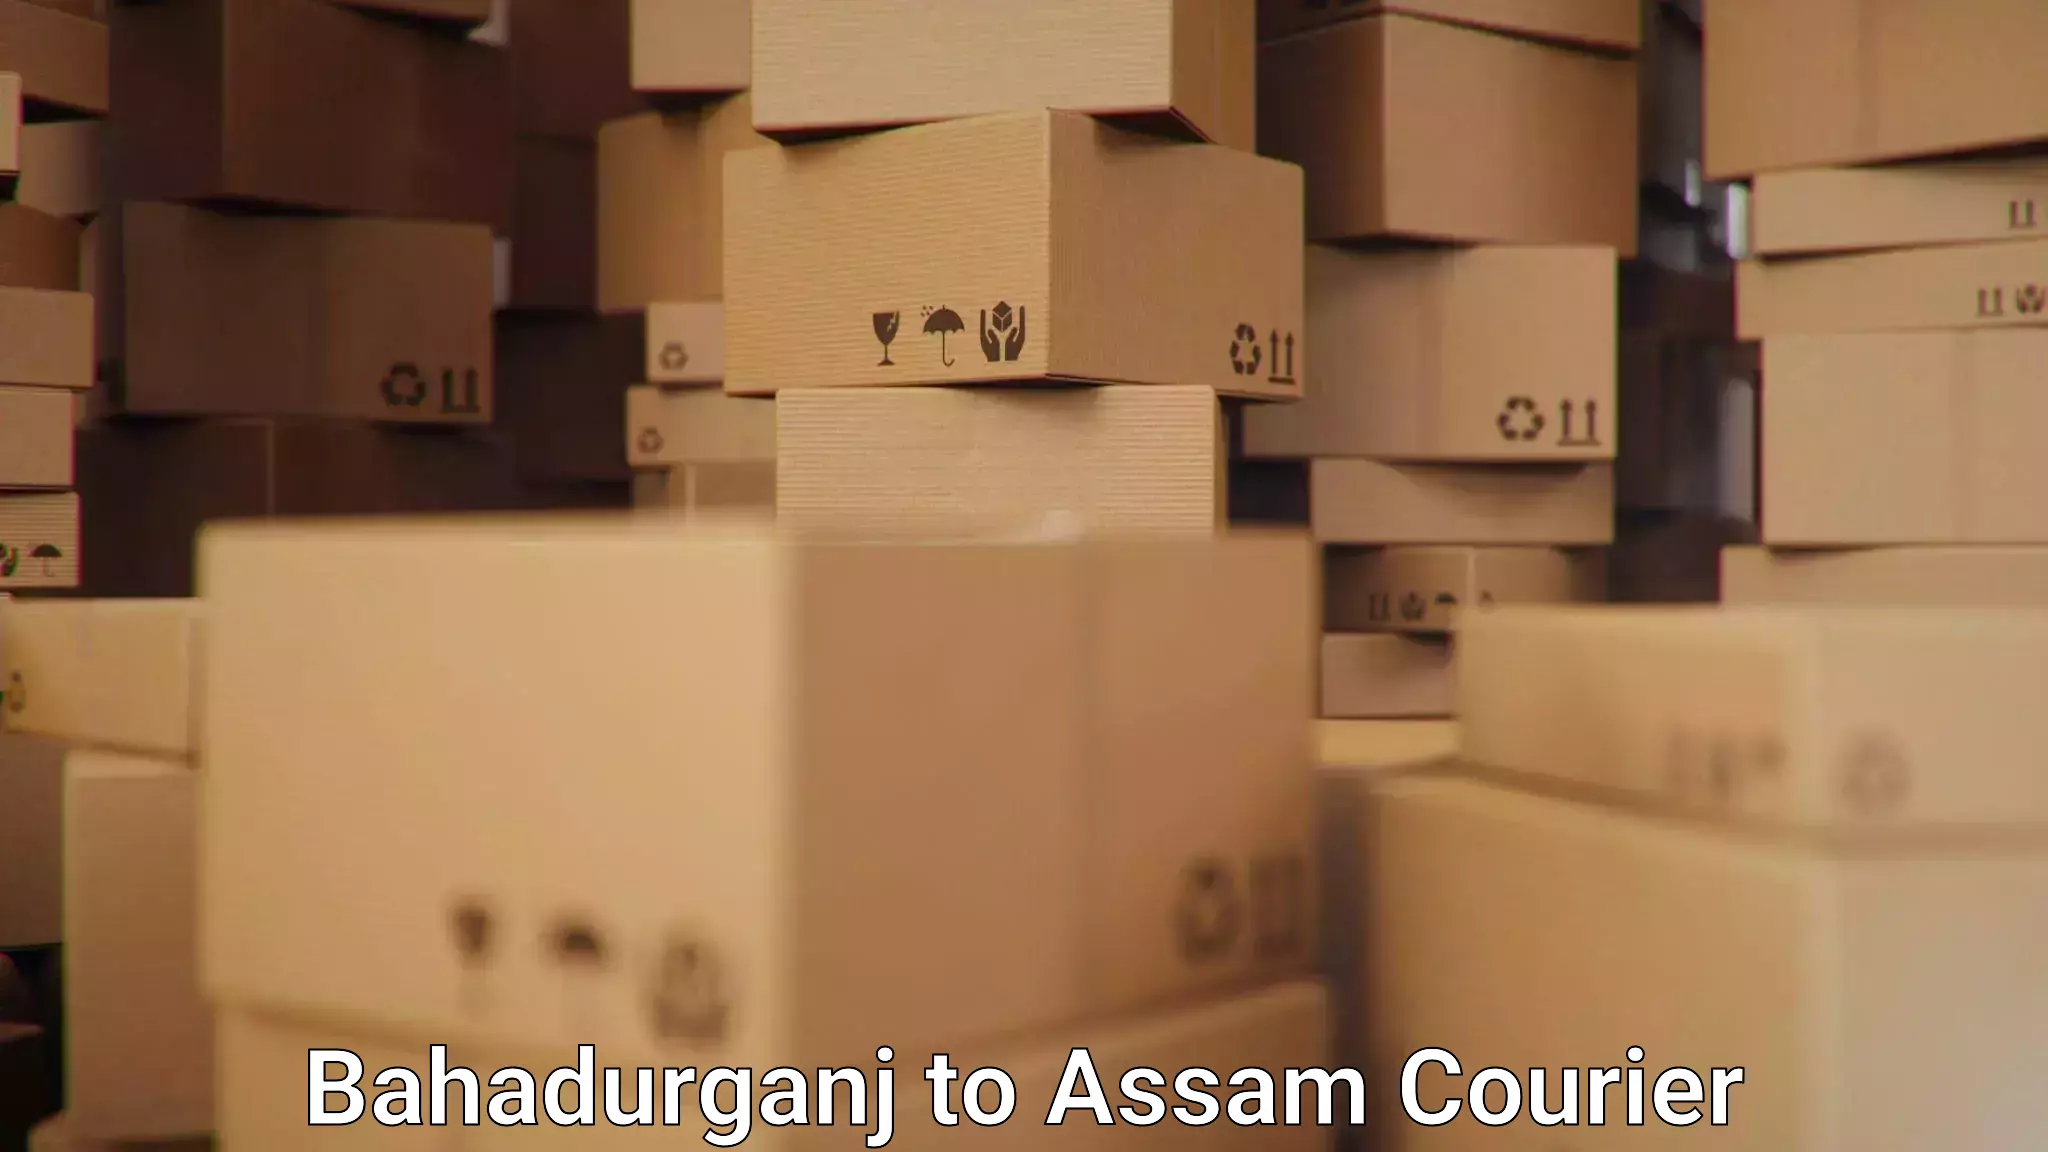 Easy return solutions Bahadurganj to Assam